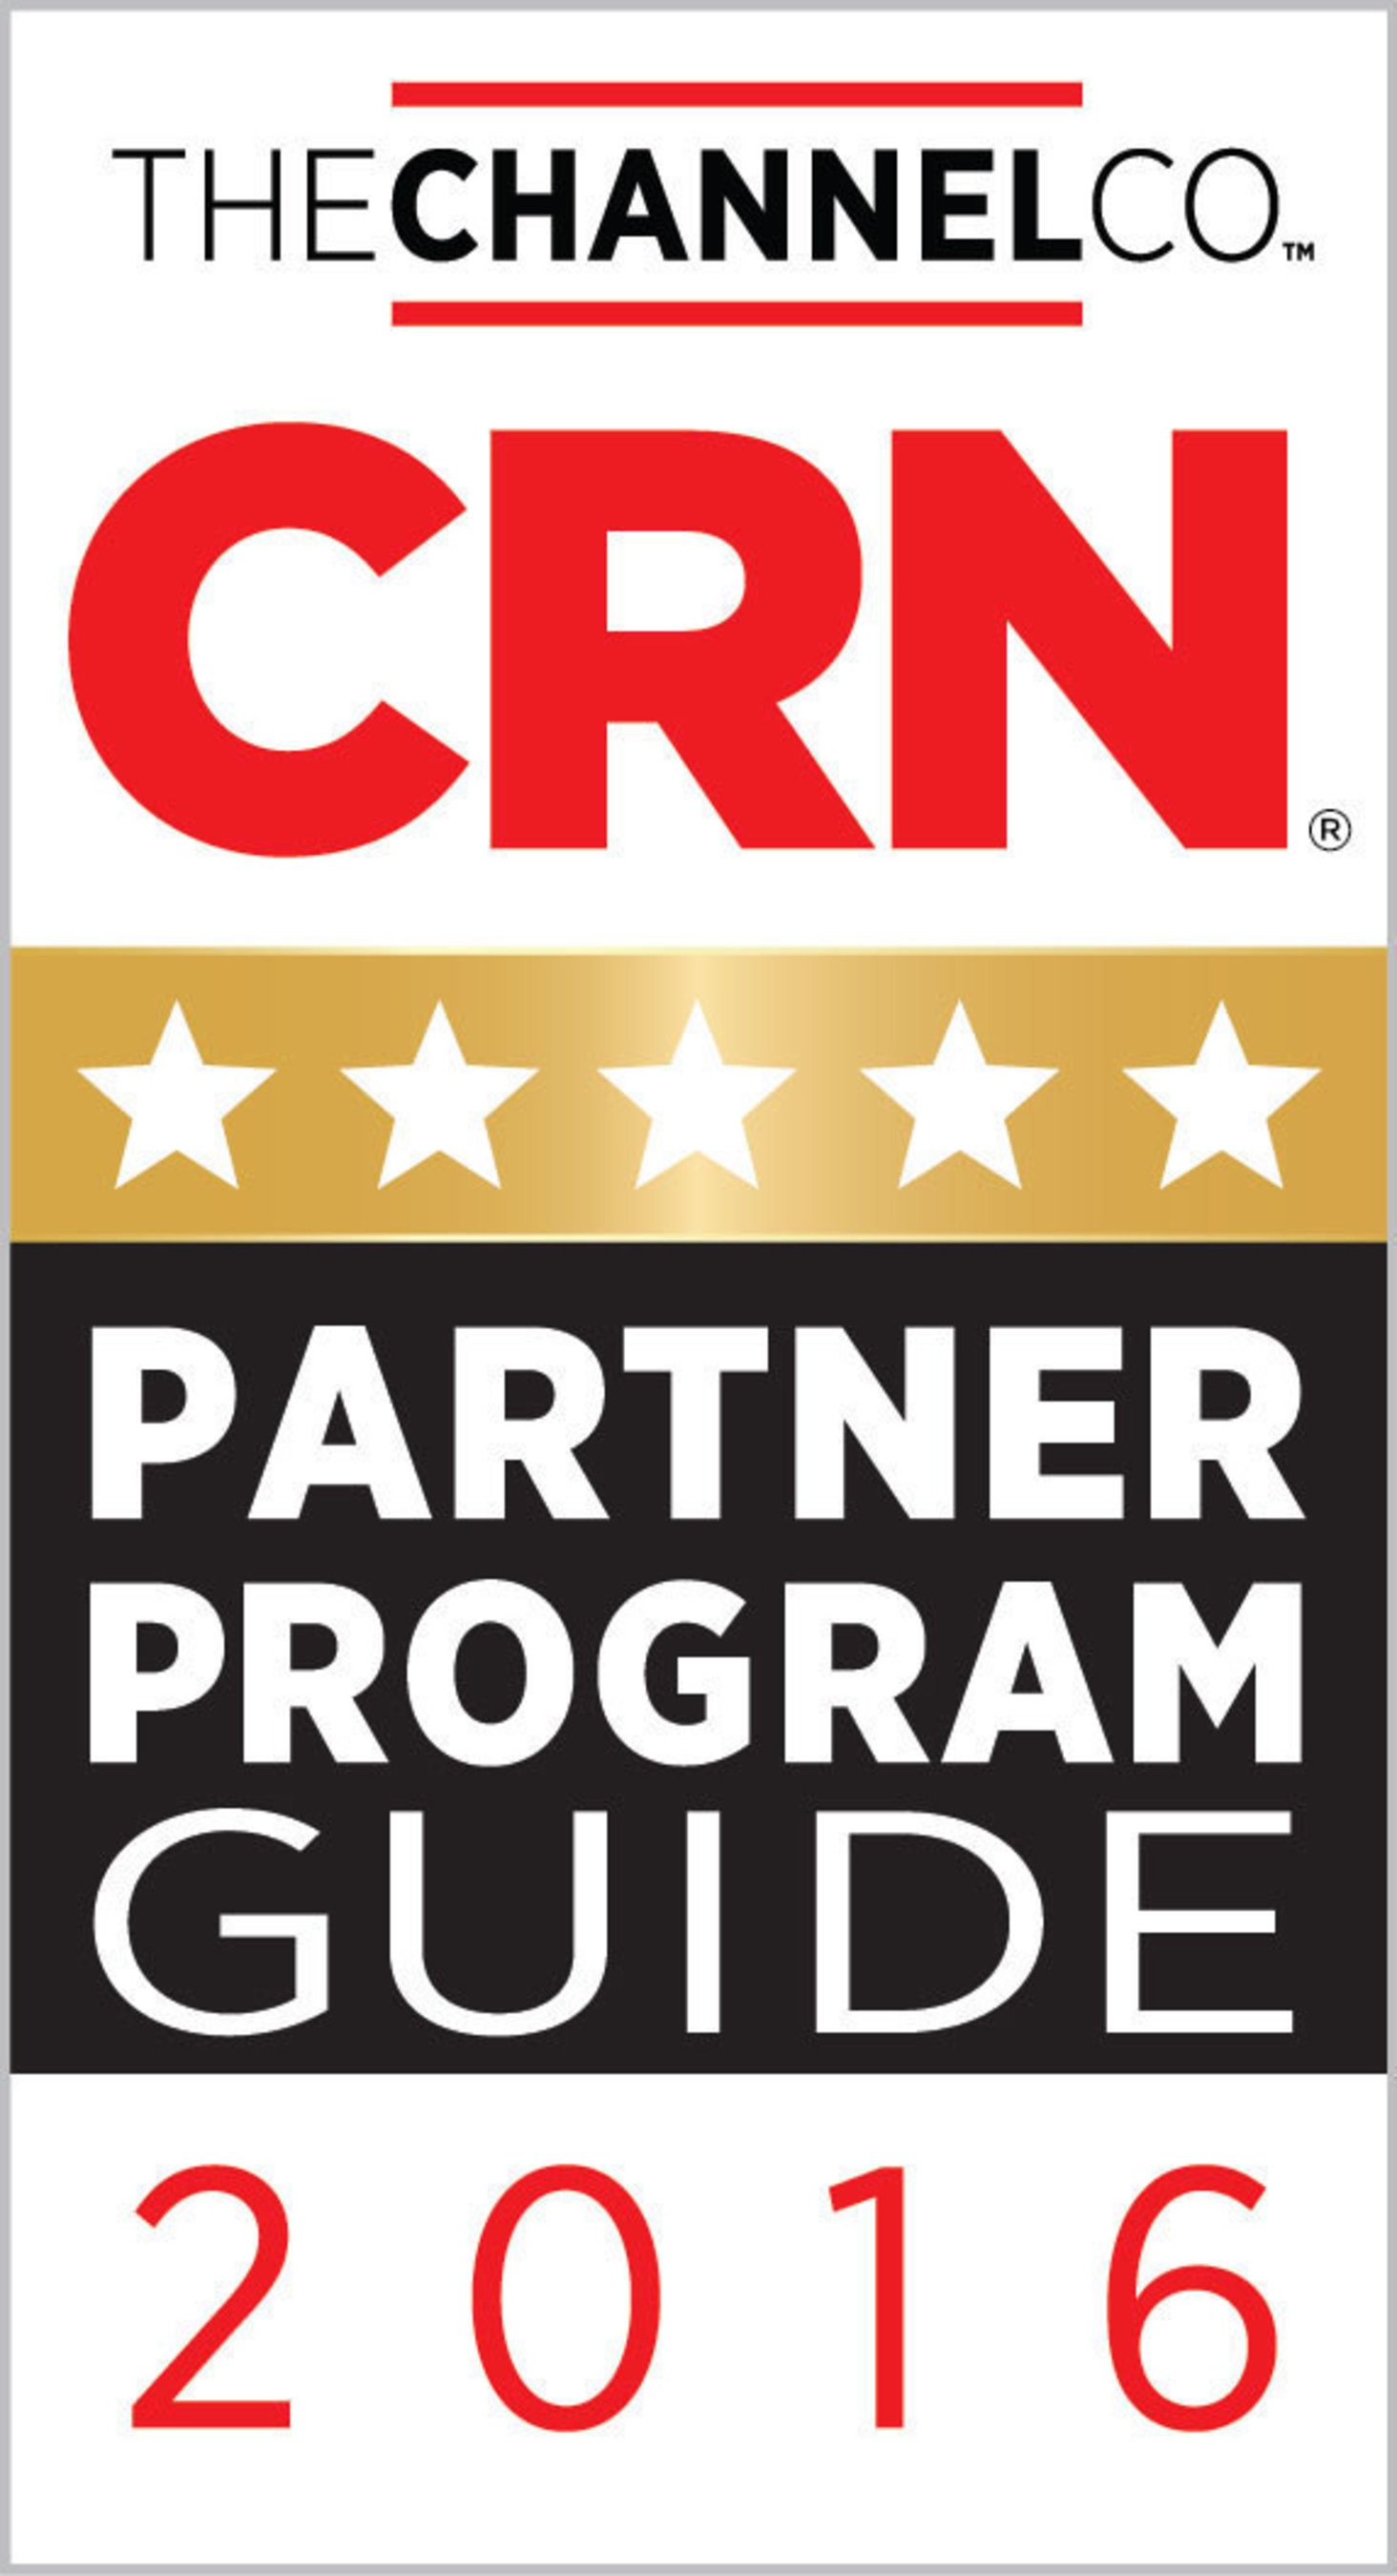 NetSuite Receives 5-Star Rating in CRN's 2016 Partner Program Guide